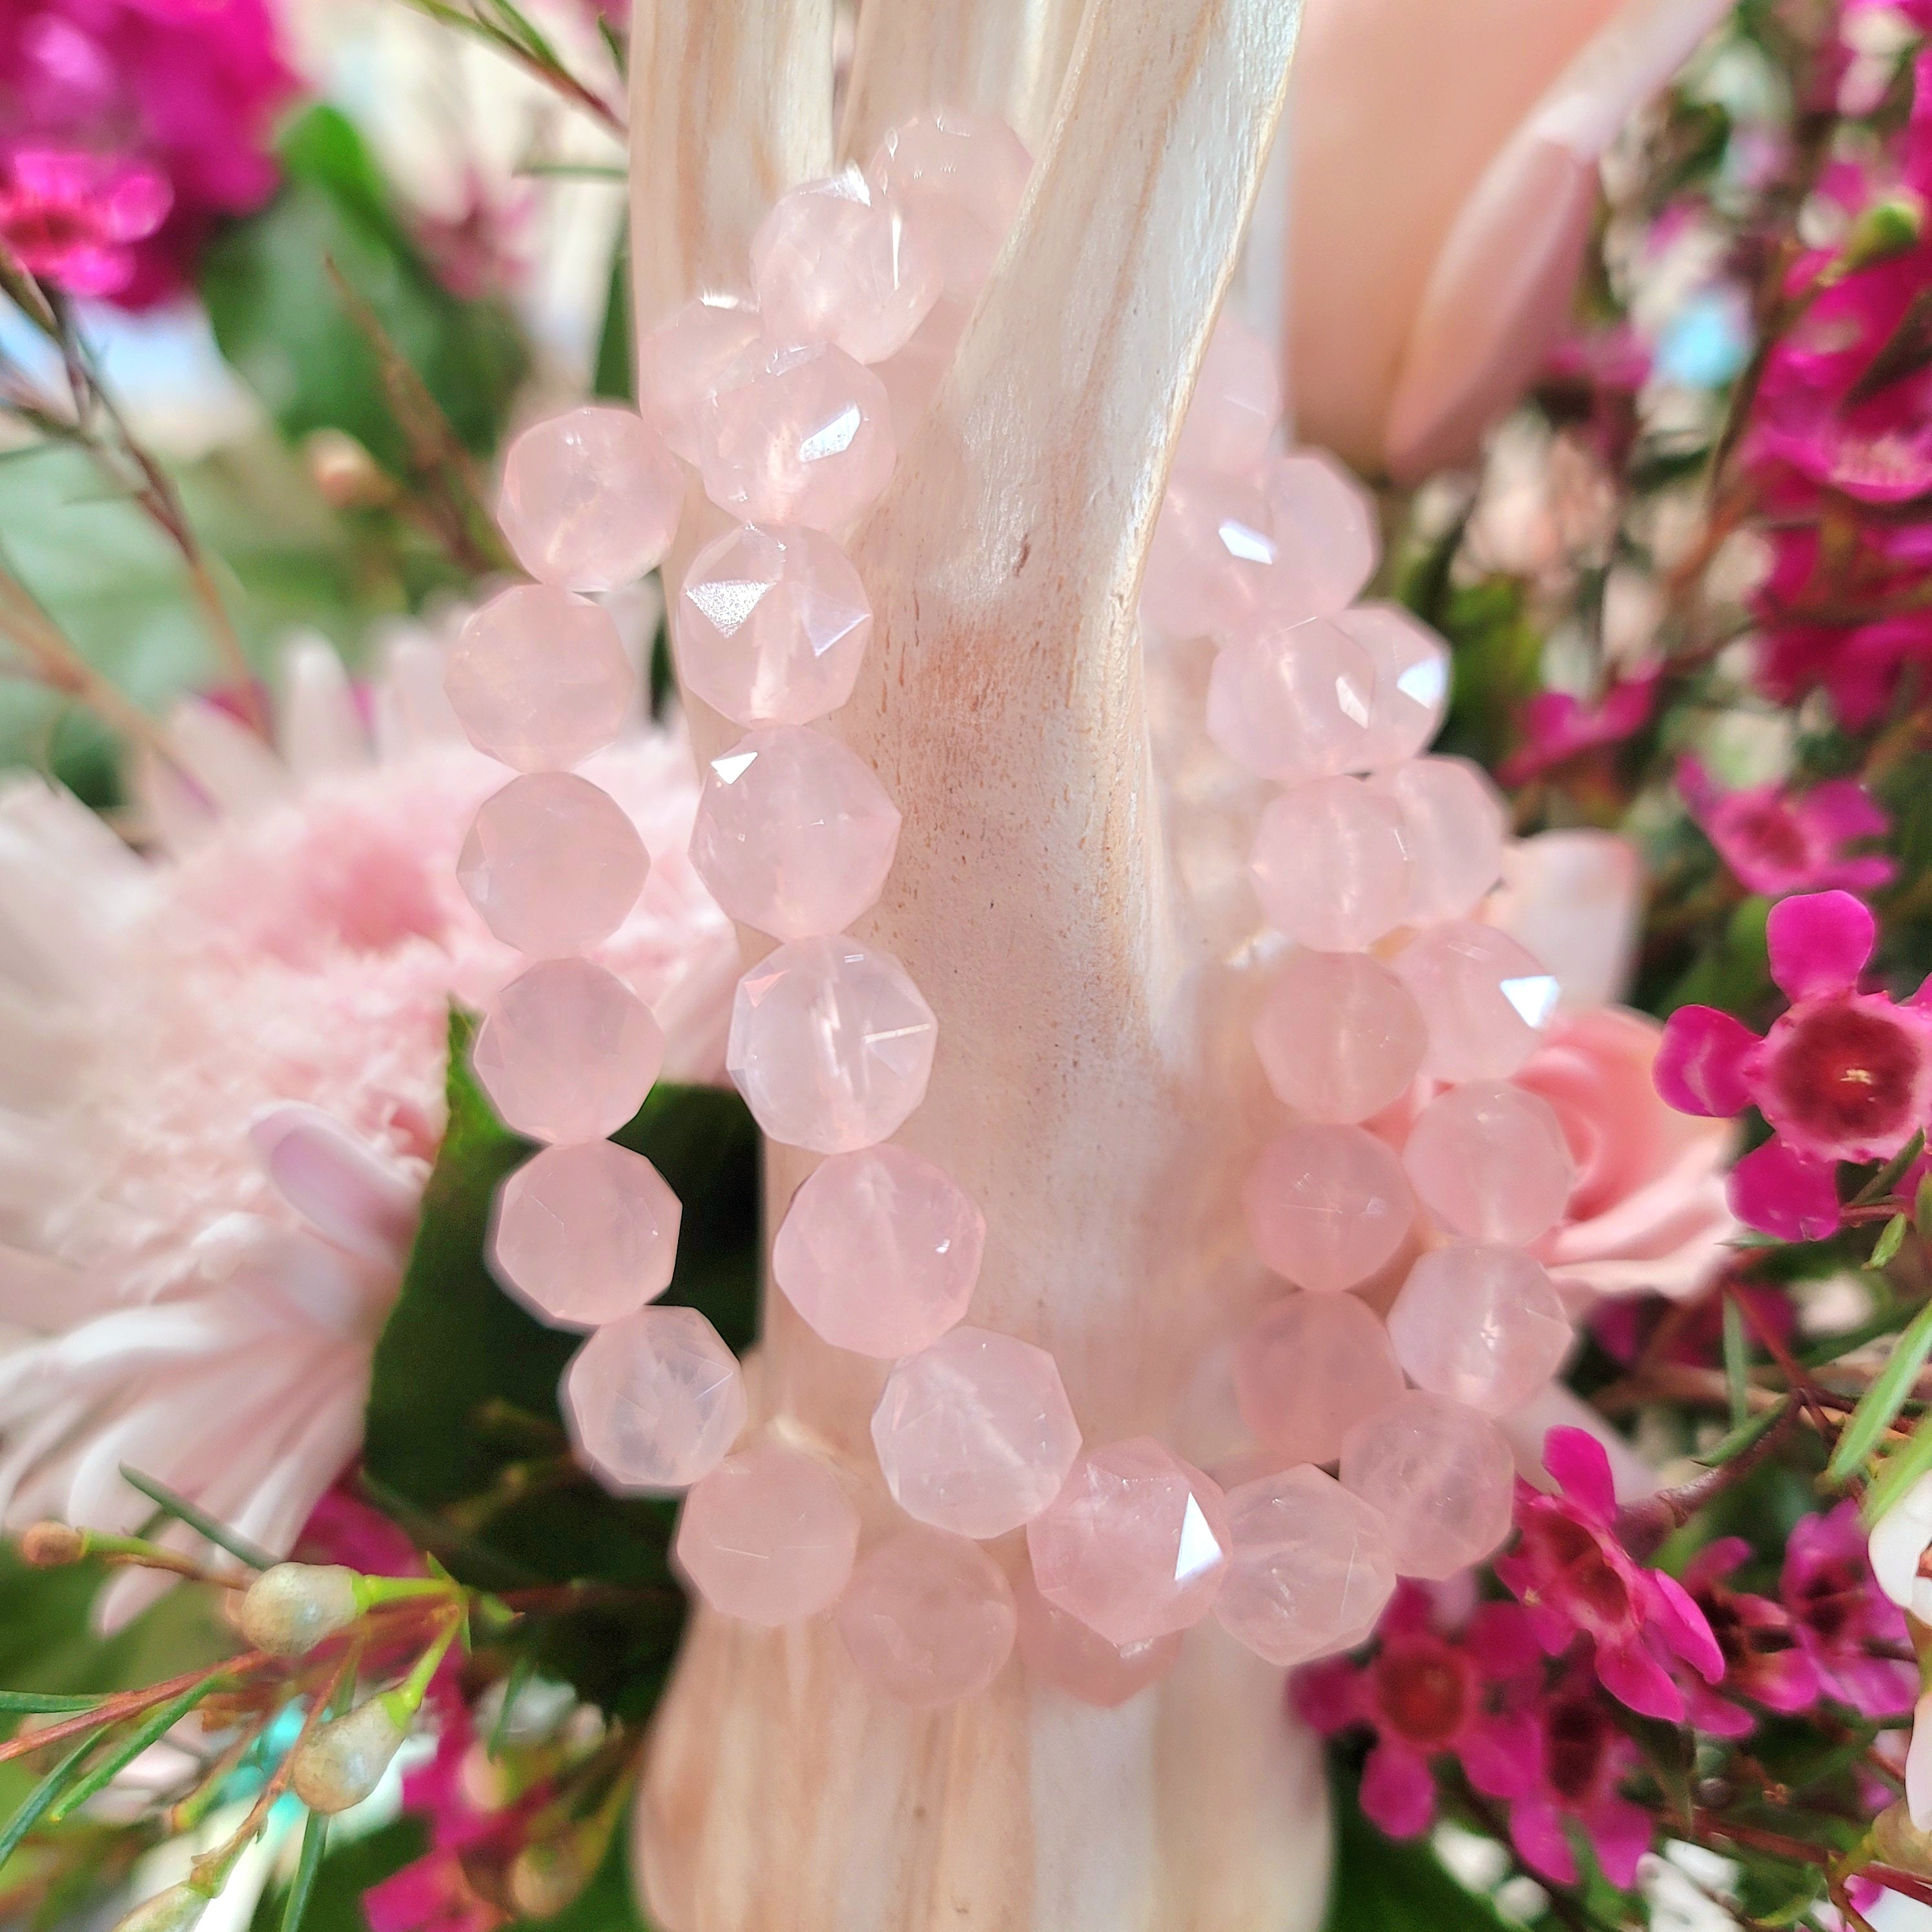 Rose Quartz Star Faceted Bracelet for Opening Your Heart to Love